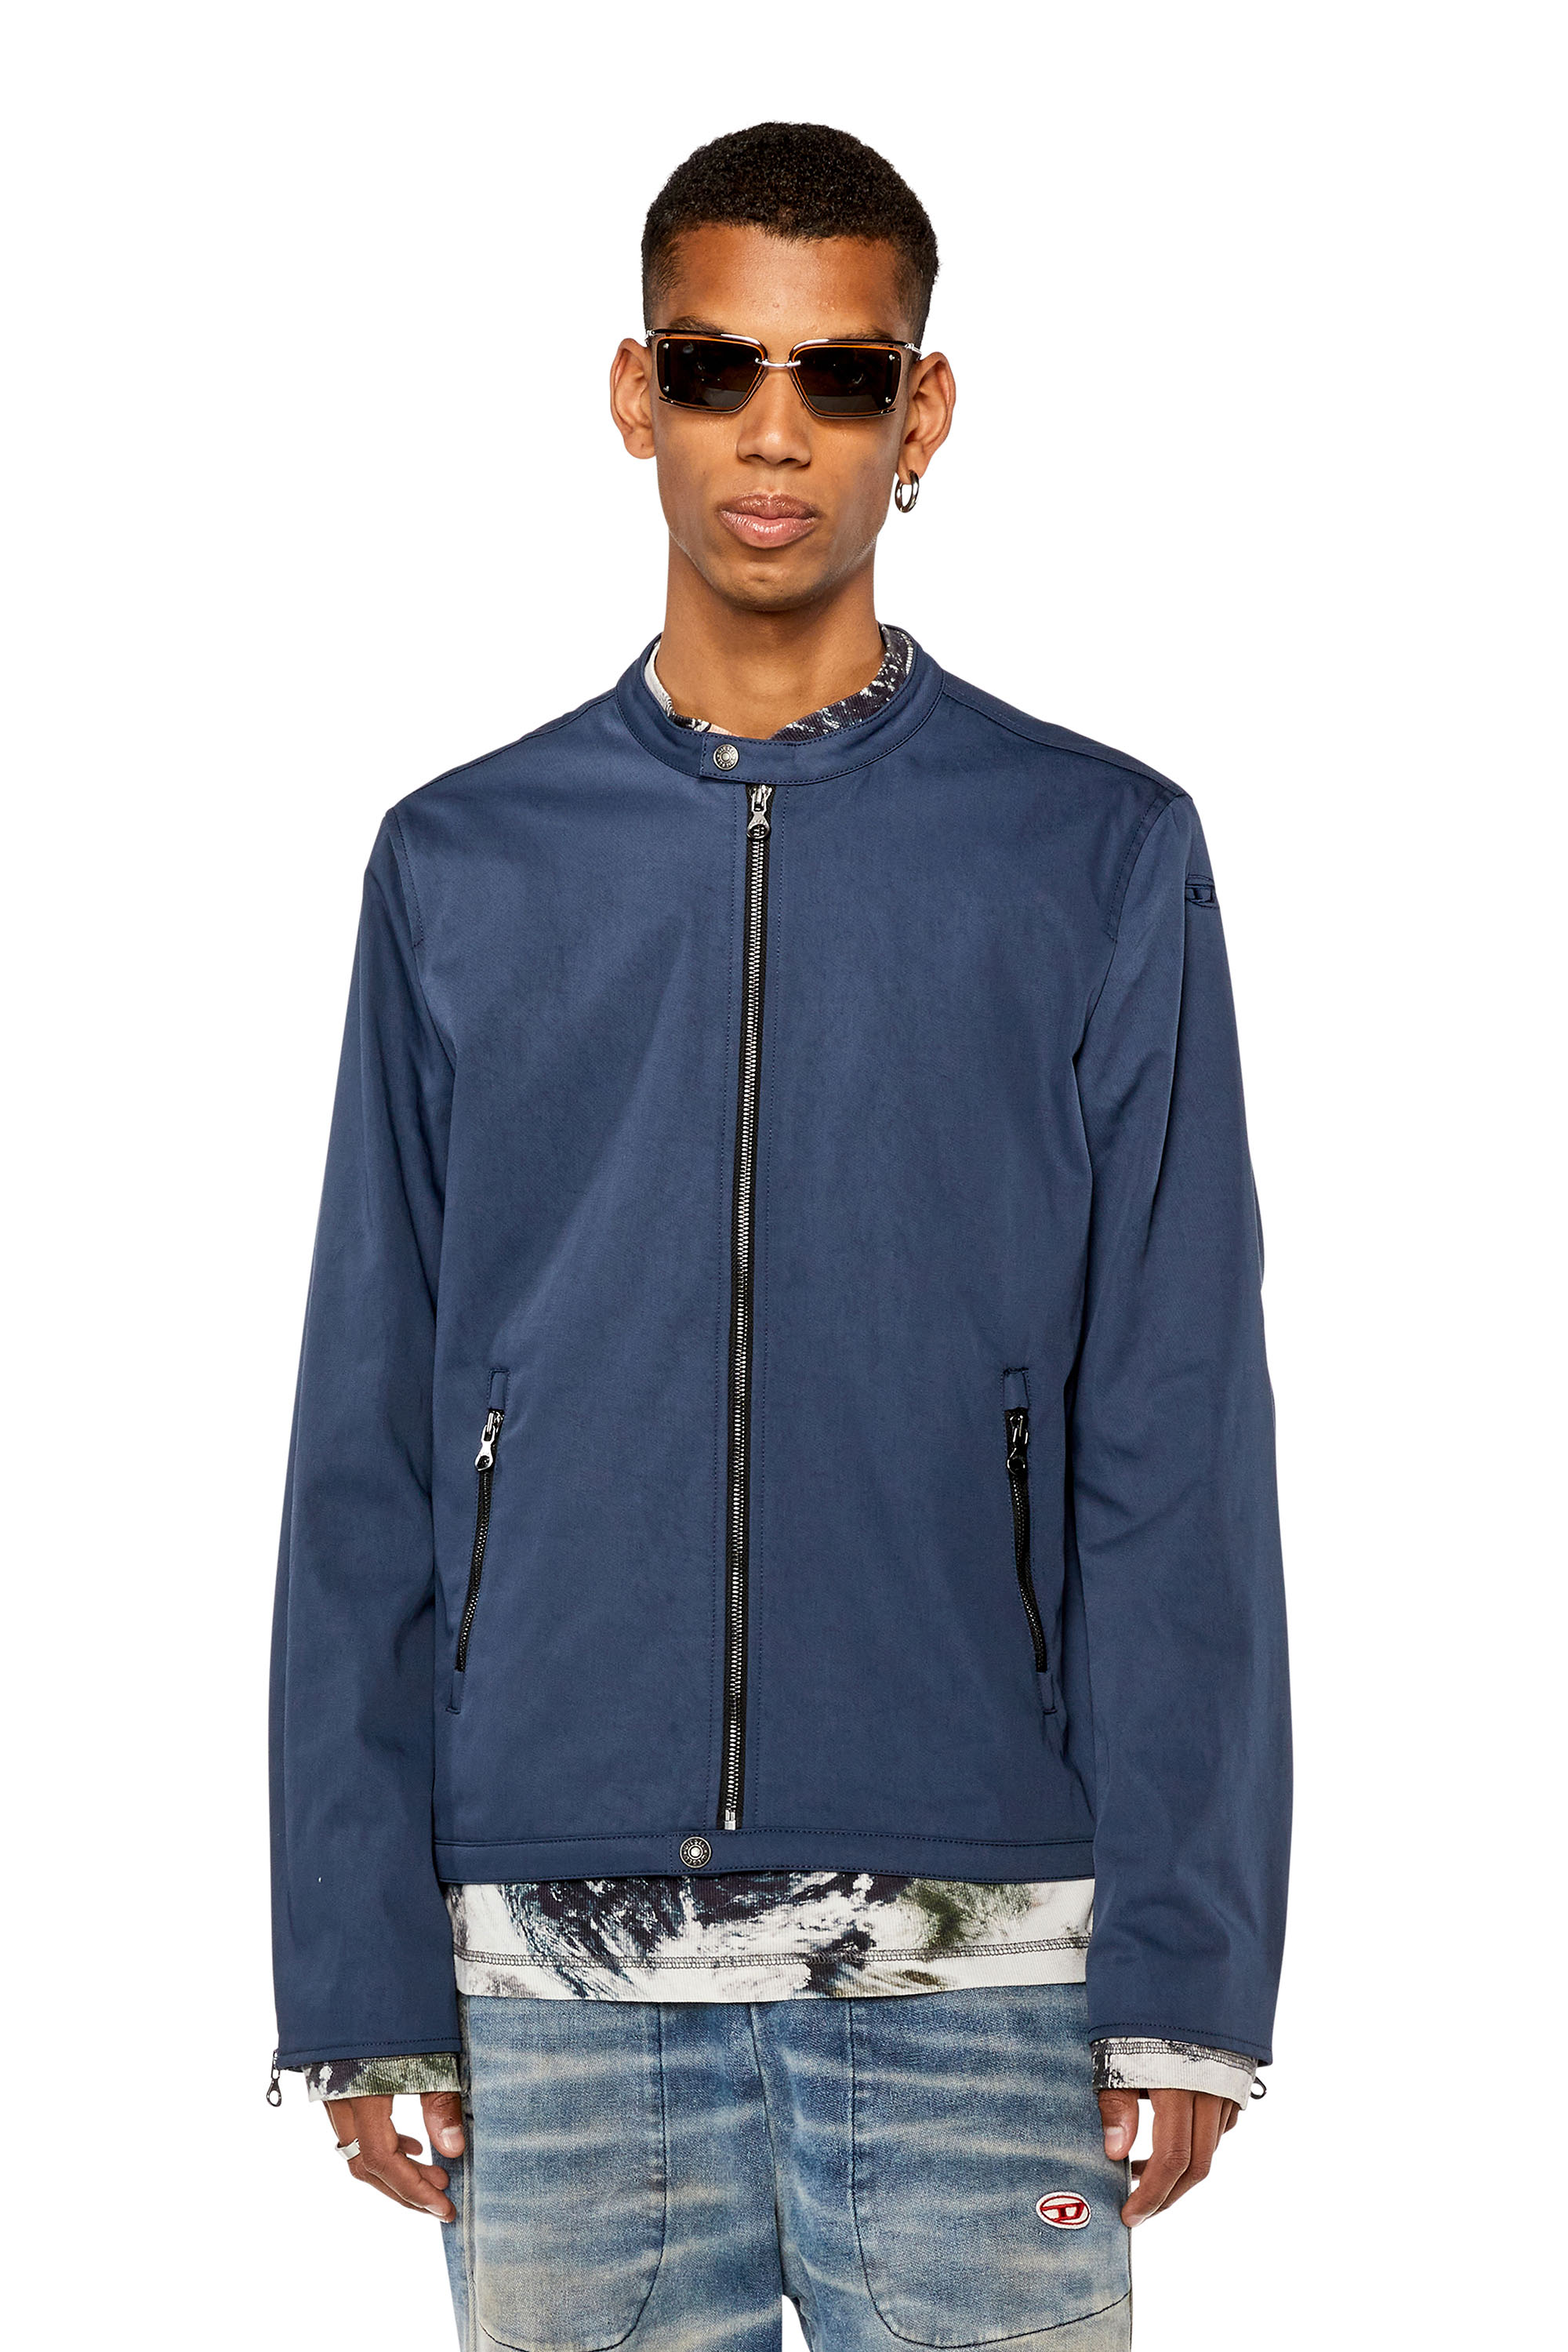 Diesel - J-GLORY-NW, Male Biker jacket in cotton-touch nylon in Blue - Image 1